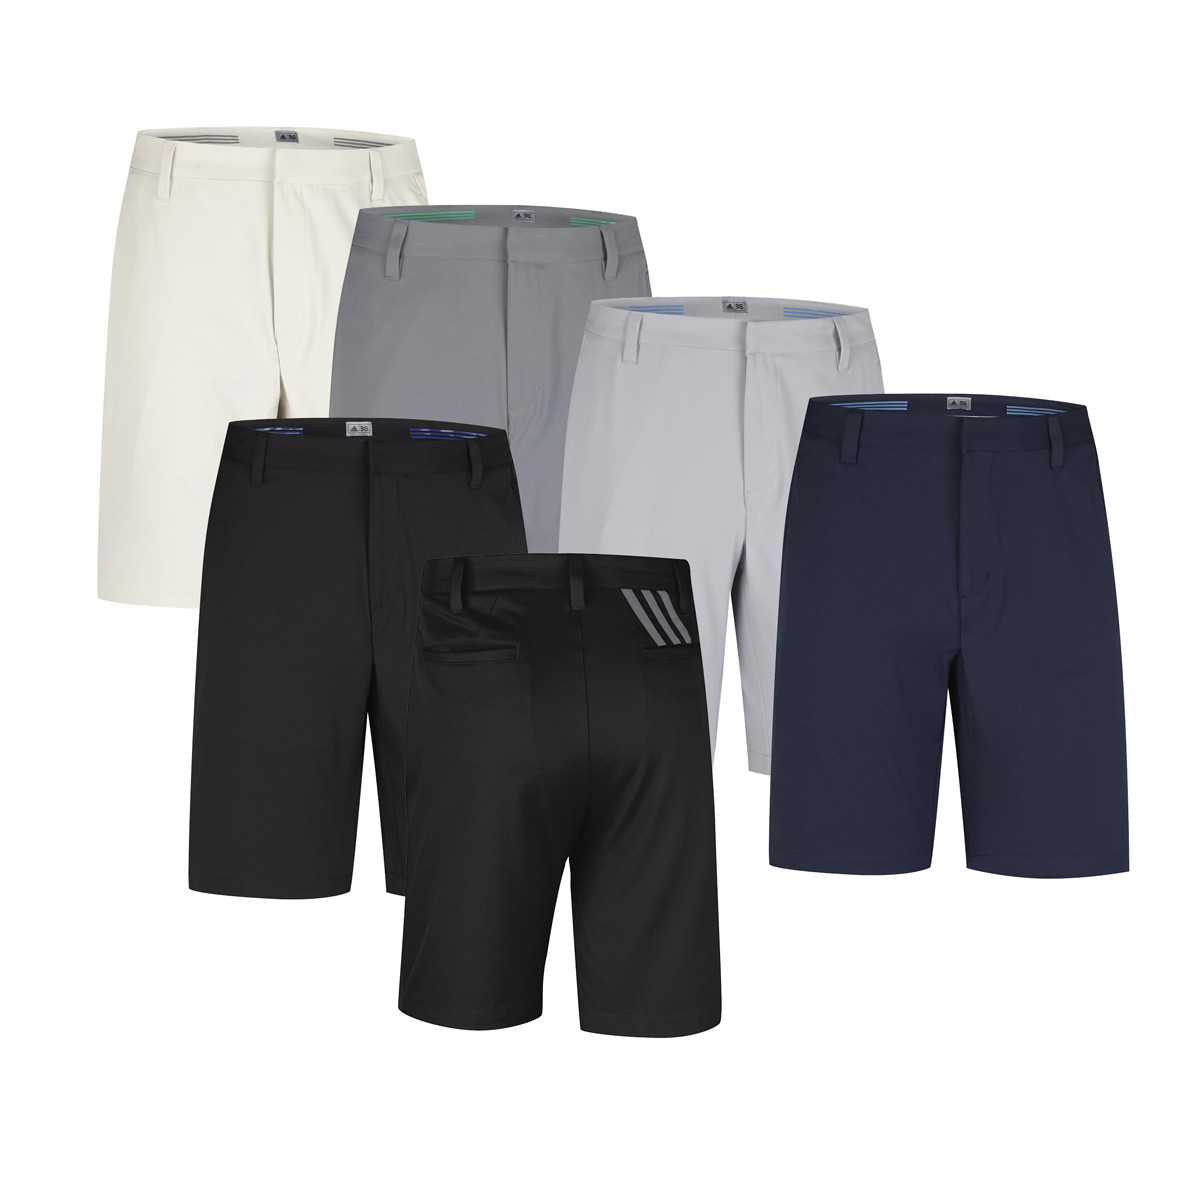 Adidas 3 Stripes Short - Discount Men's Golf Shorts & Pants - Hurricane